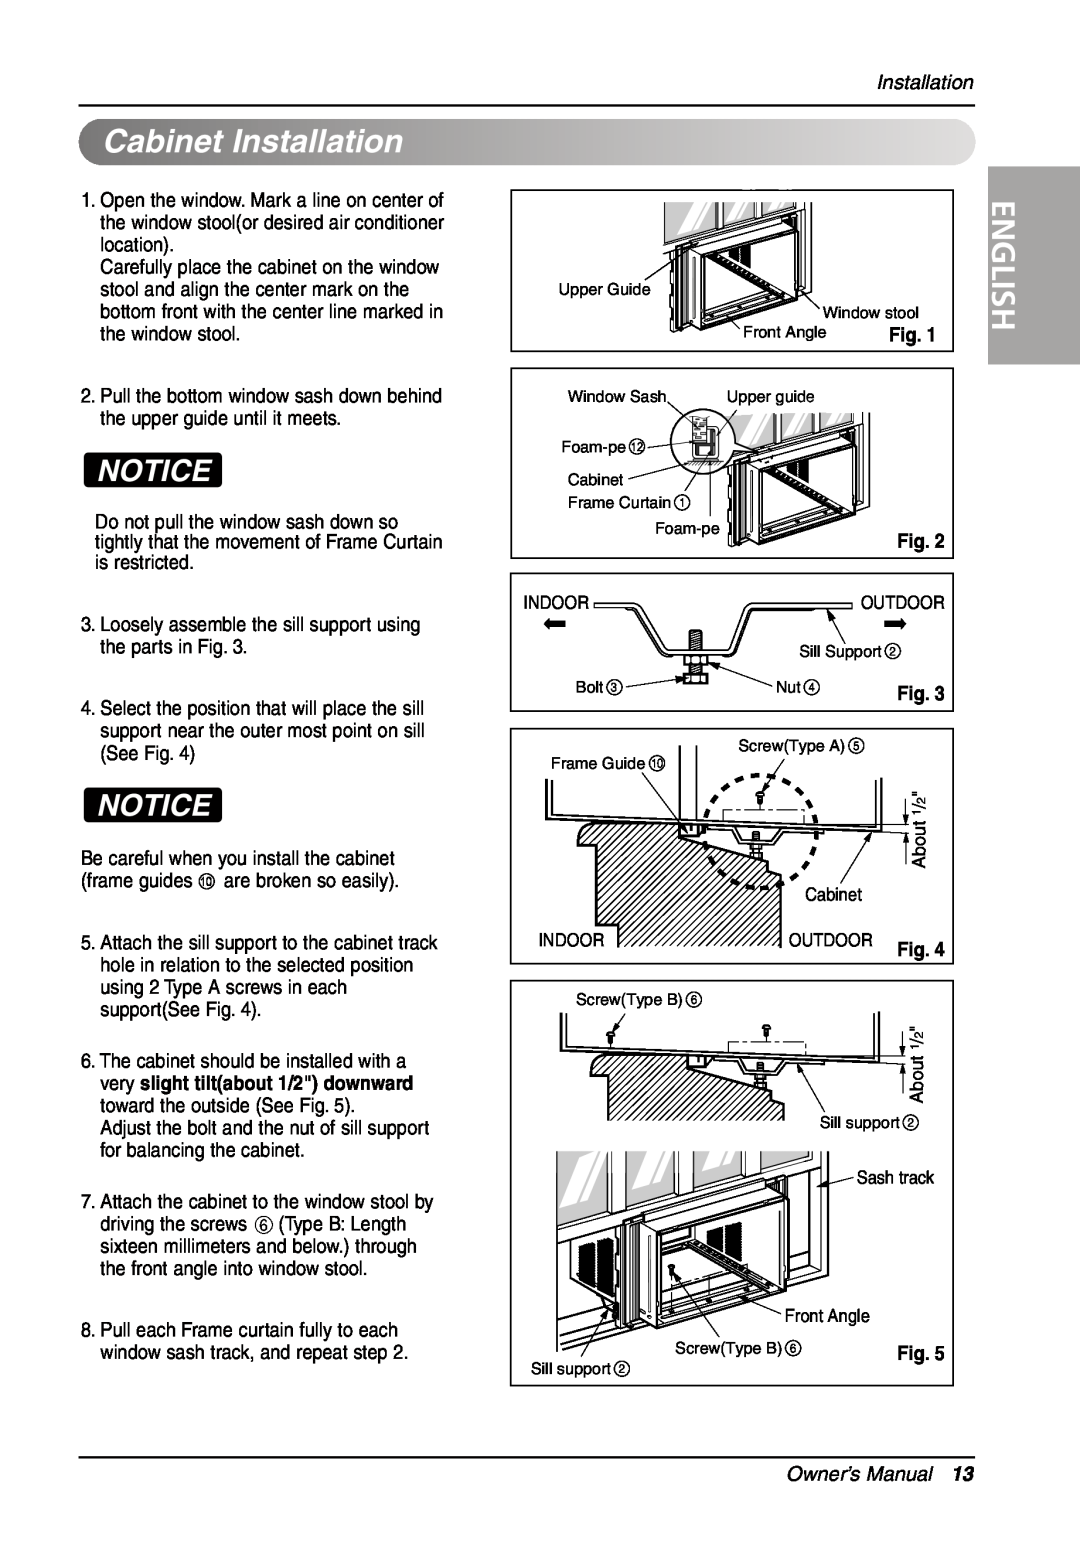 LG Electronics LW701 HR owner manual CabinetInstallation, English, Owner’s Manual 